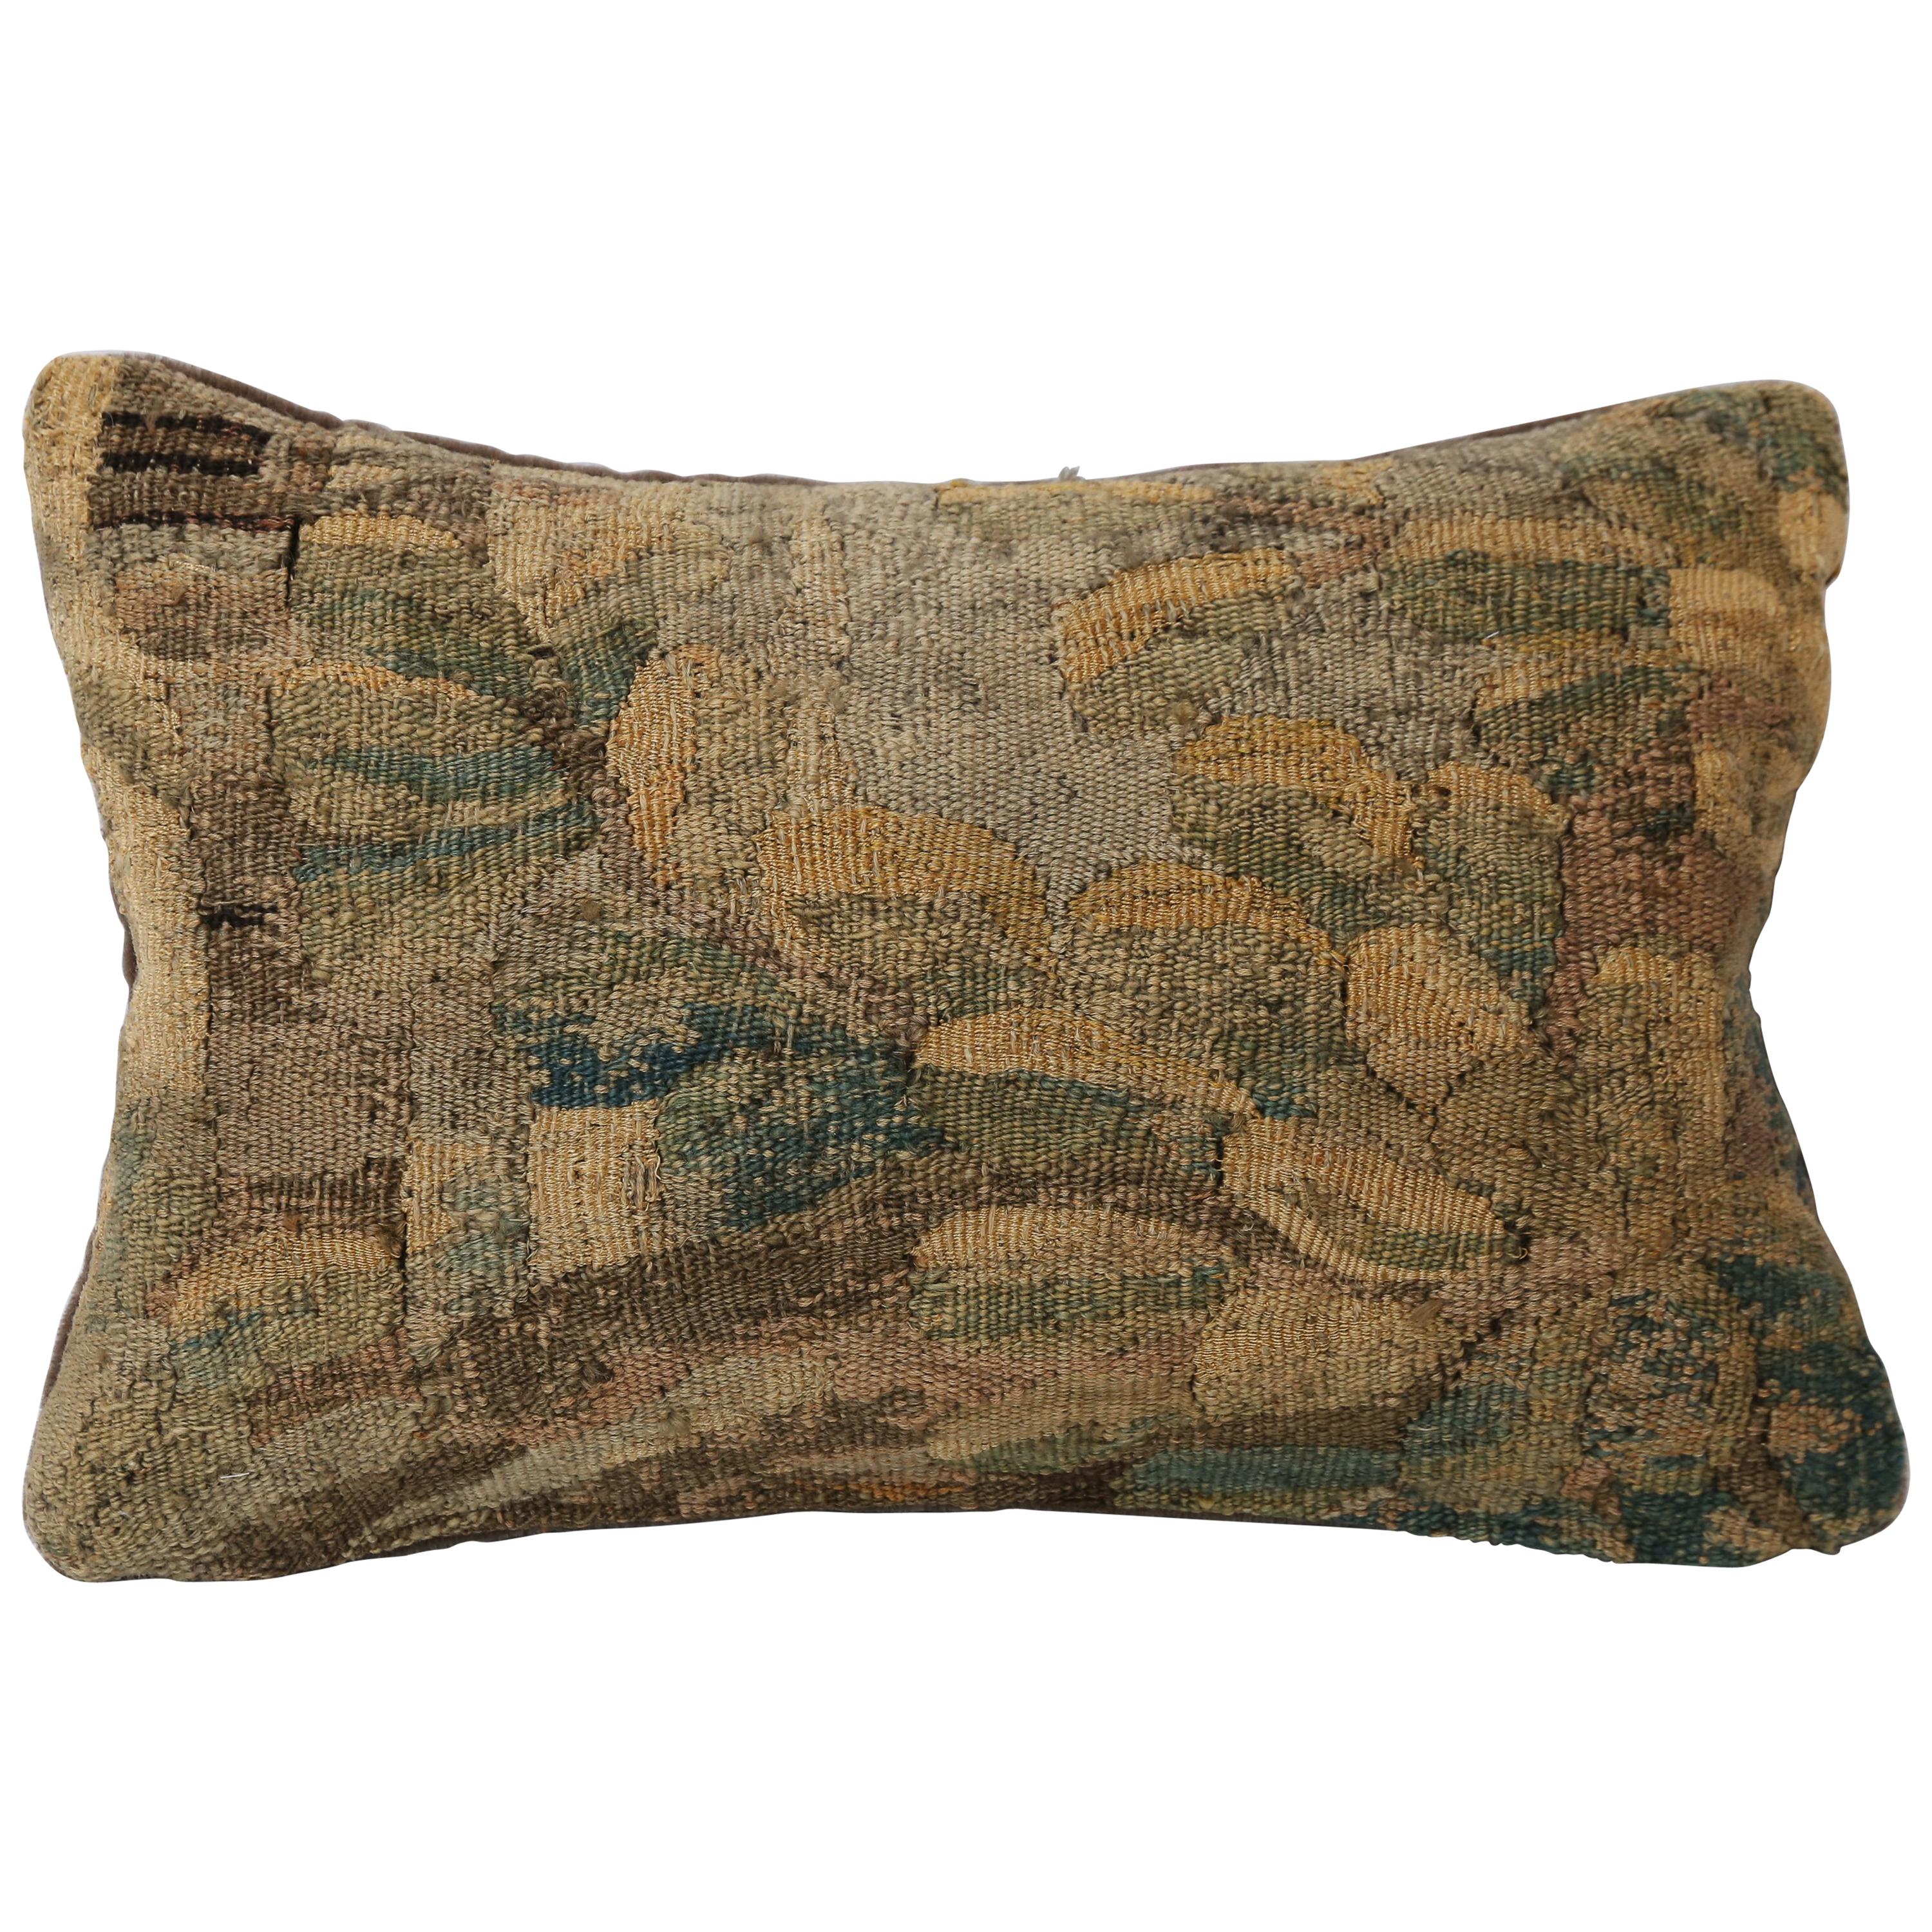 18th Century Aubusson Pillow